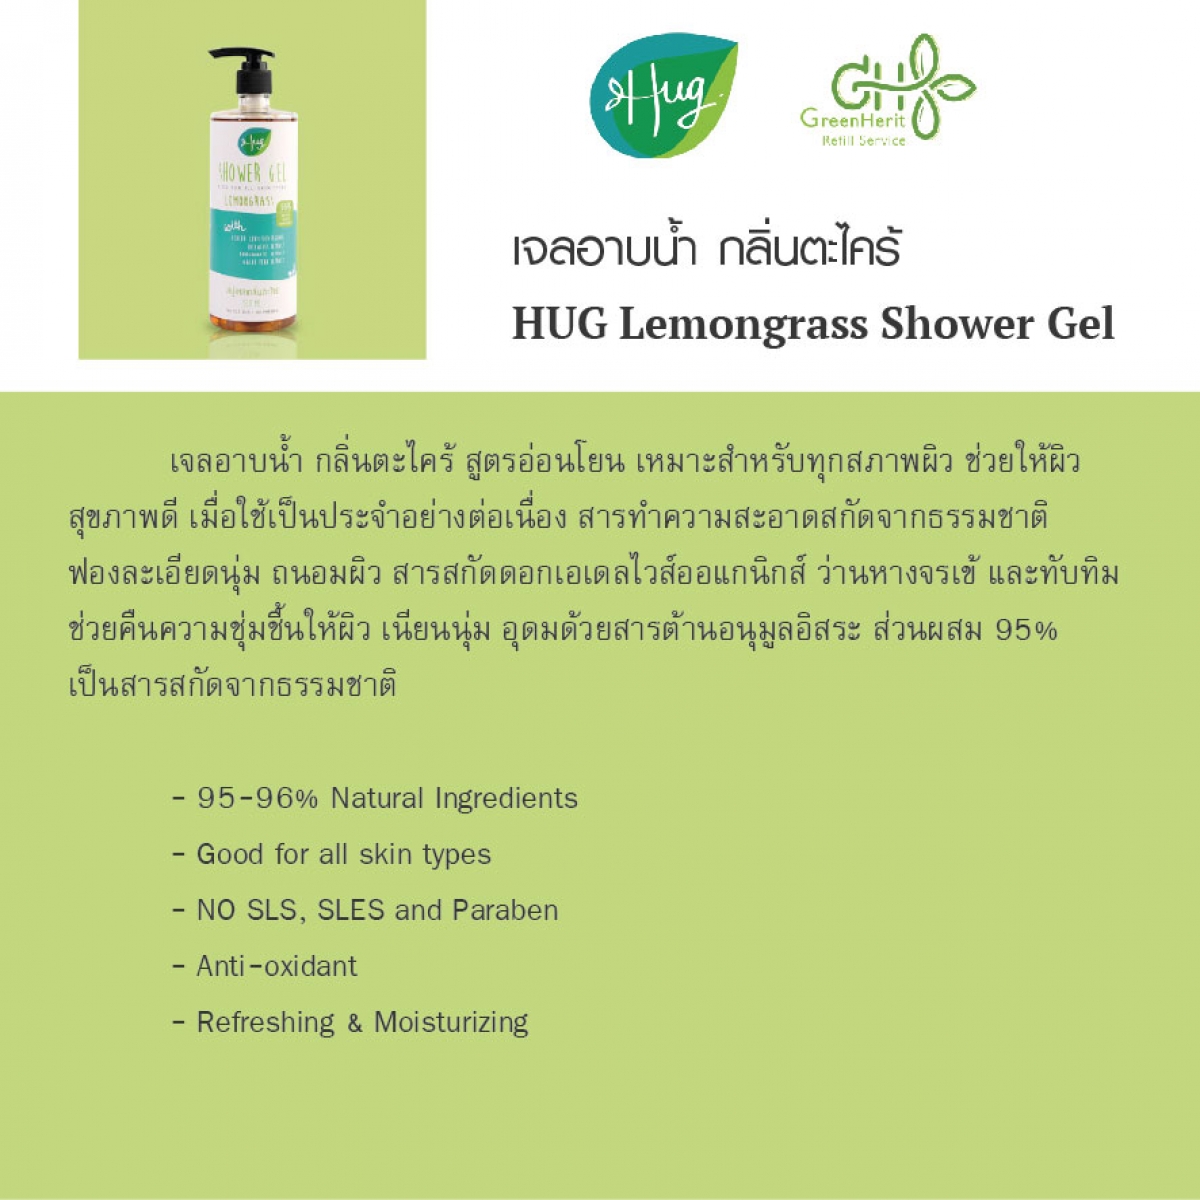 Organic Product > HUG Lemongrass Shower Gel